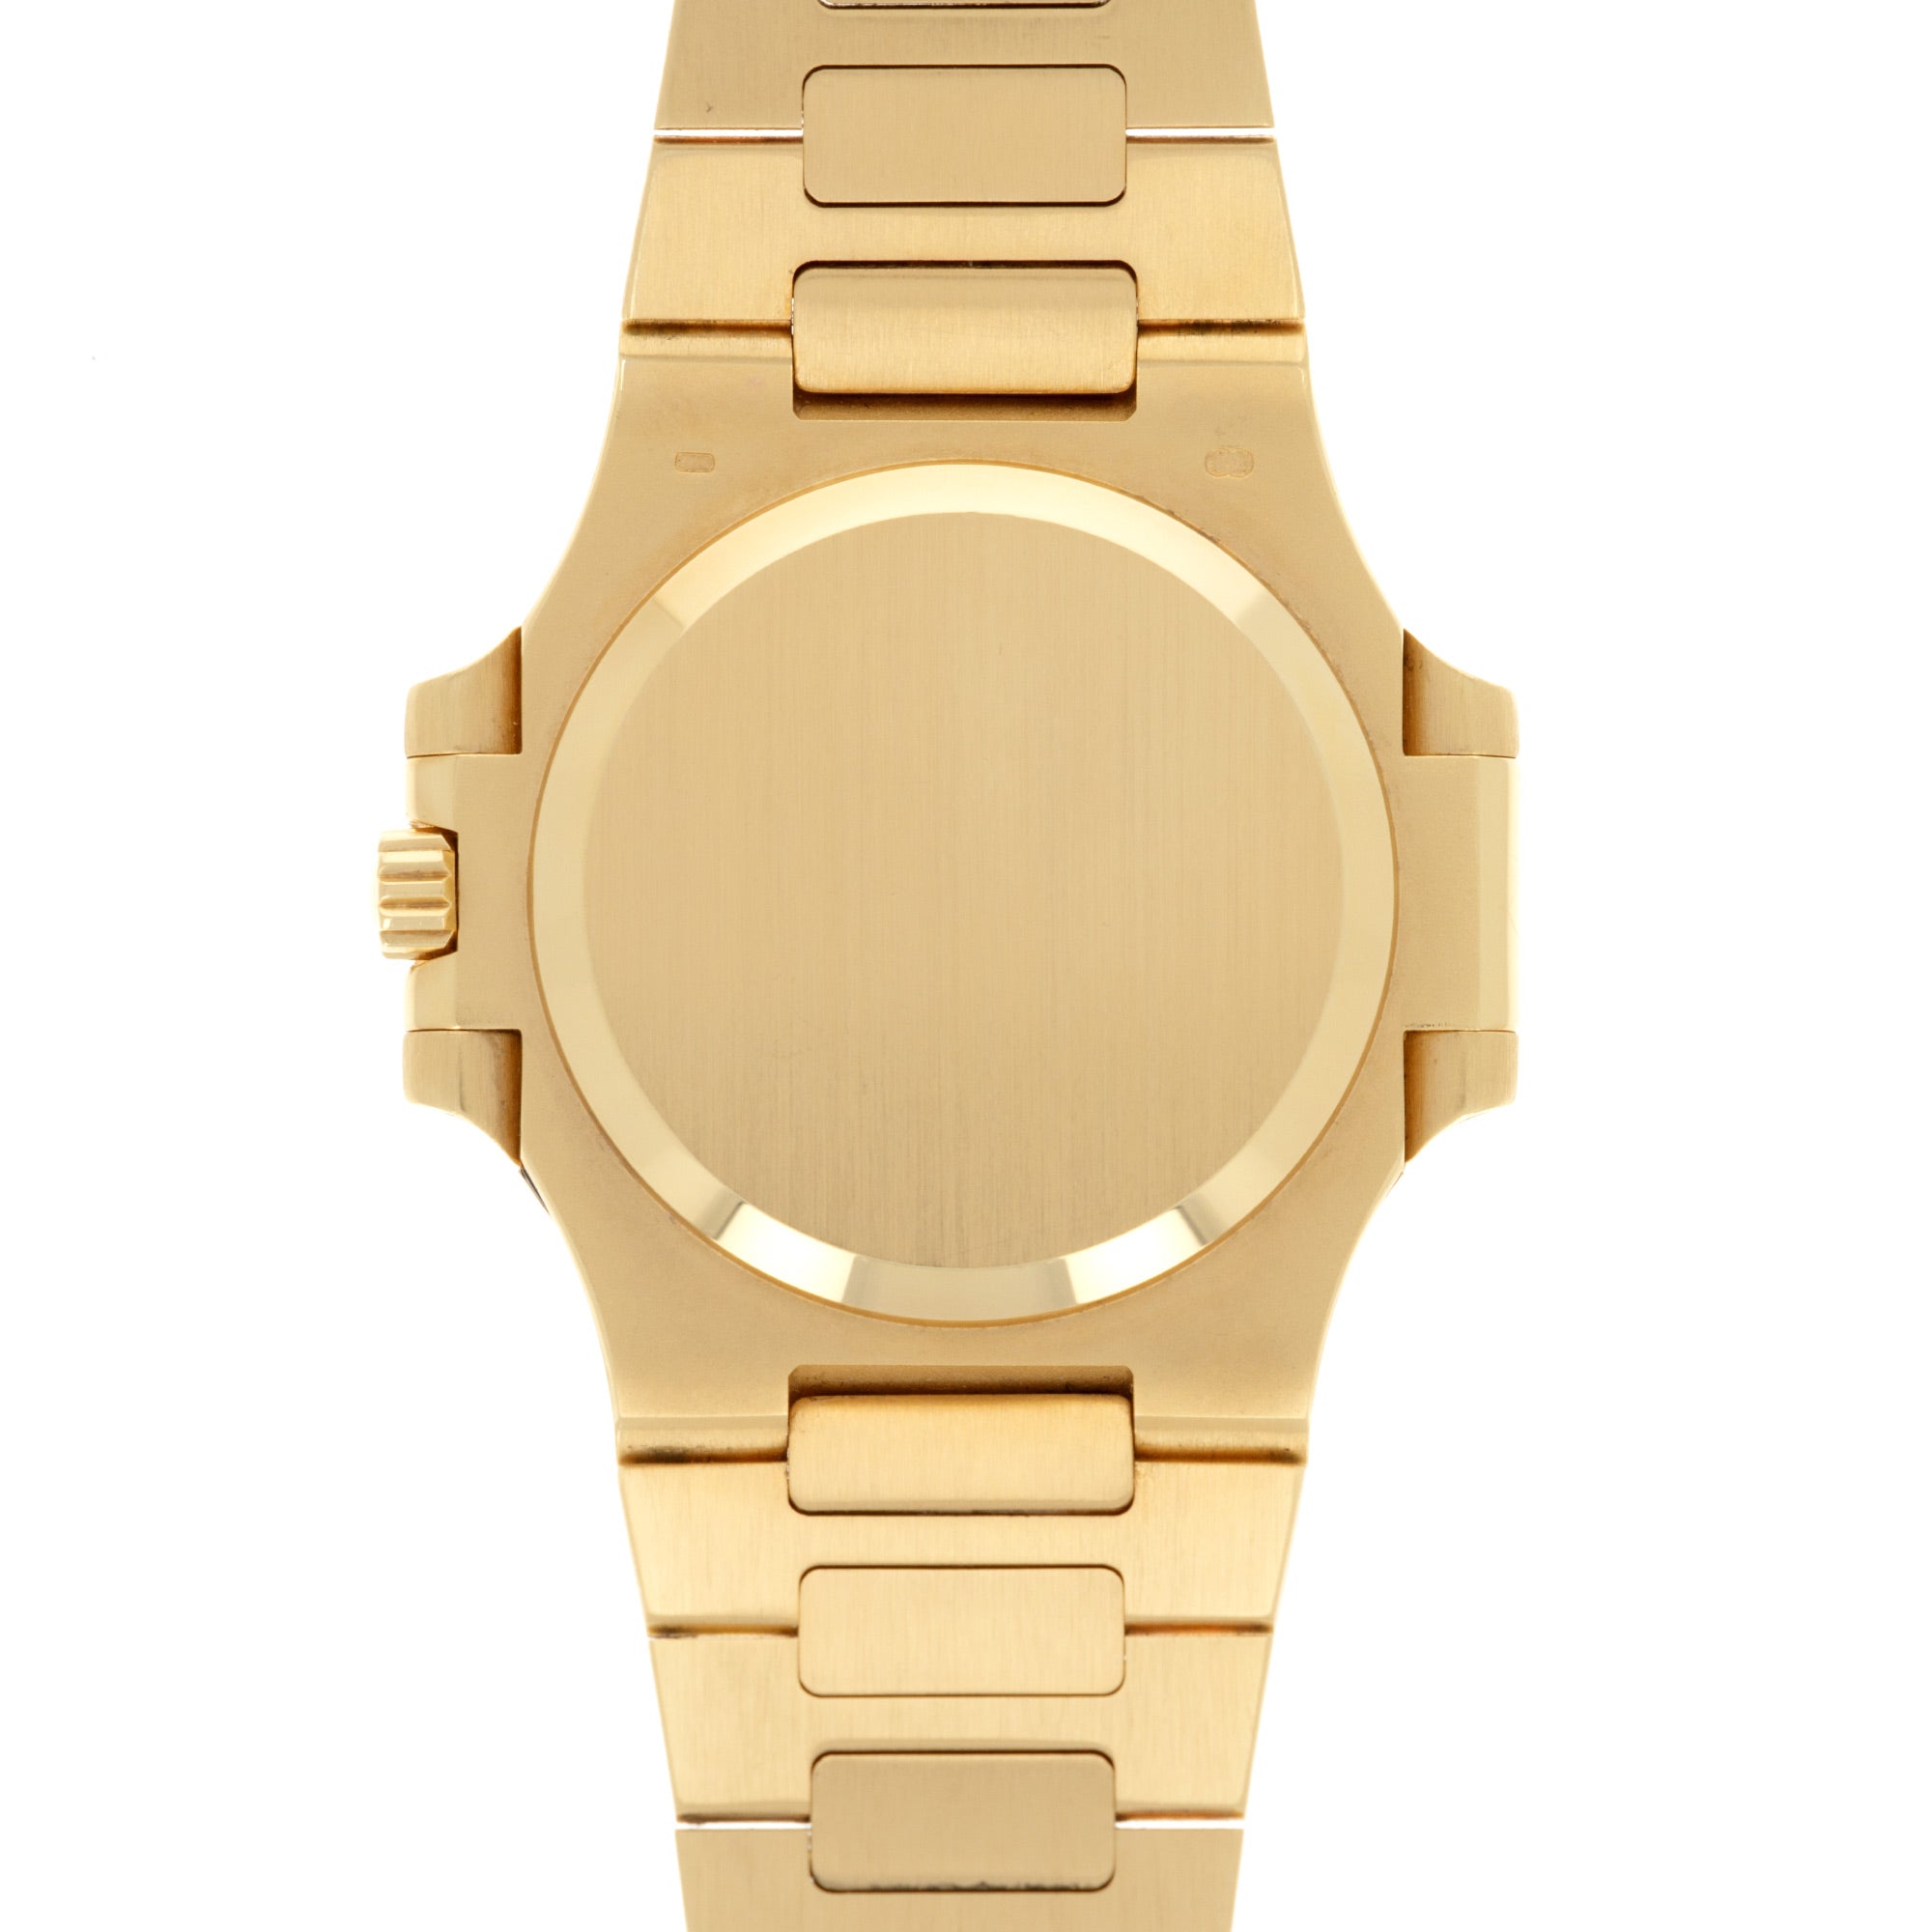 Patek Philippe - Patek Philippe Yellow Gold Nautilus Ref. 3800 with Original Warranty - The Keystone Watches